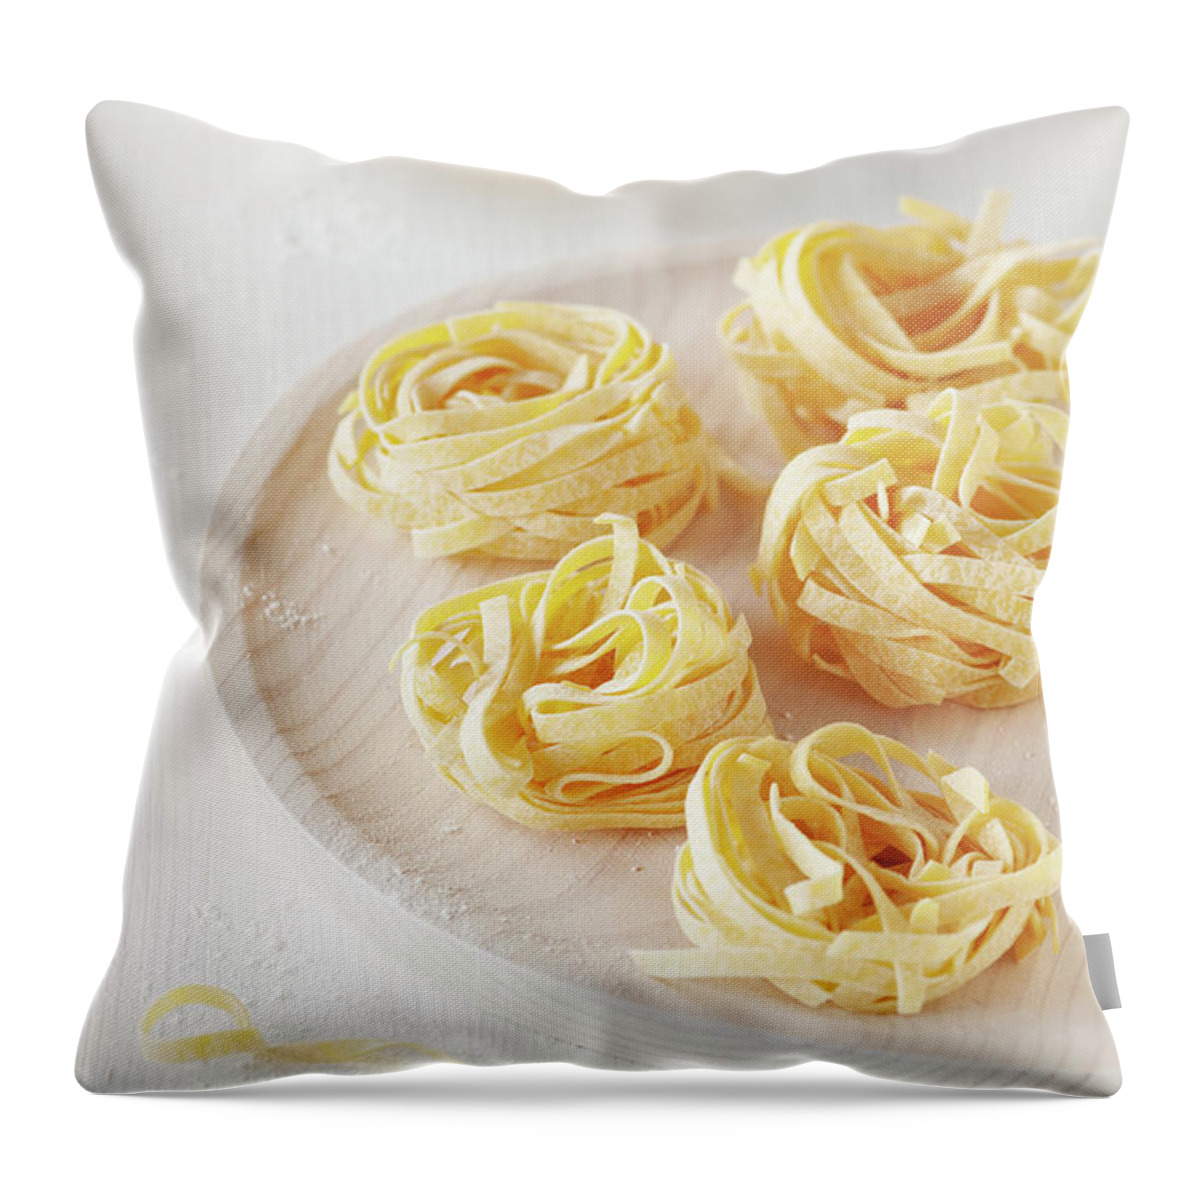 Italian Food Throw Pillow featuring the photograph Homemade Italian Pasta by Oxana Denezhkina